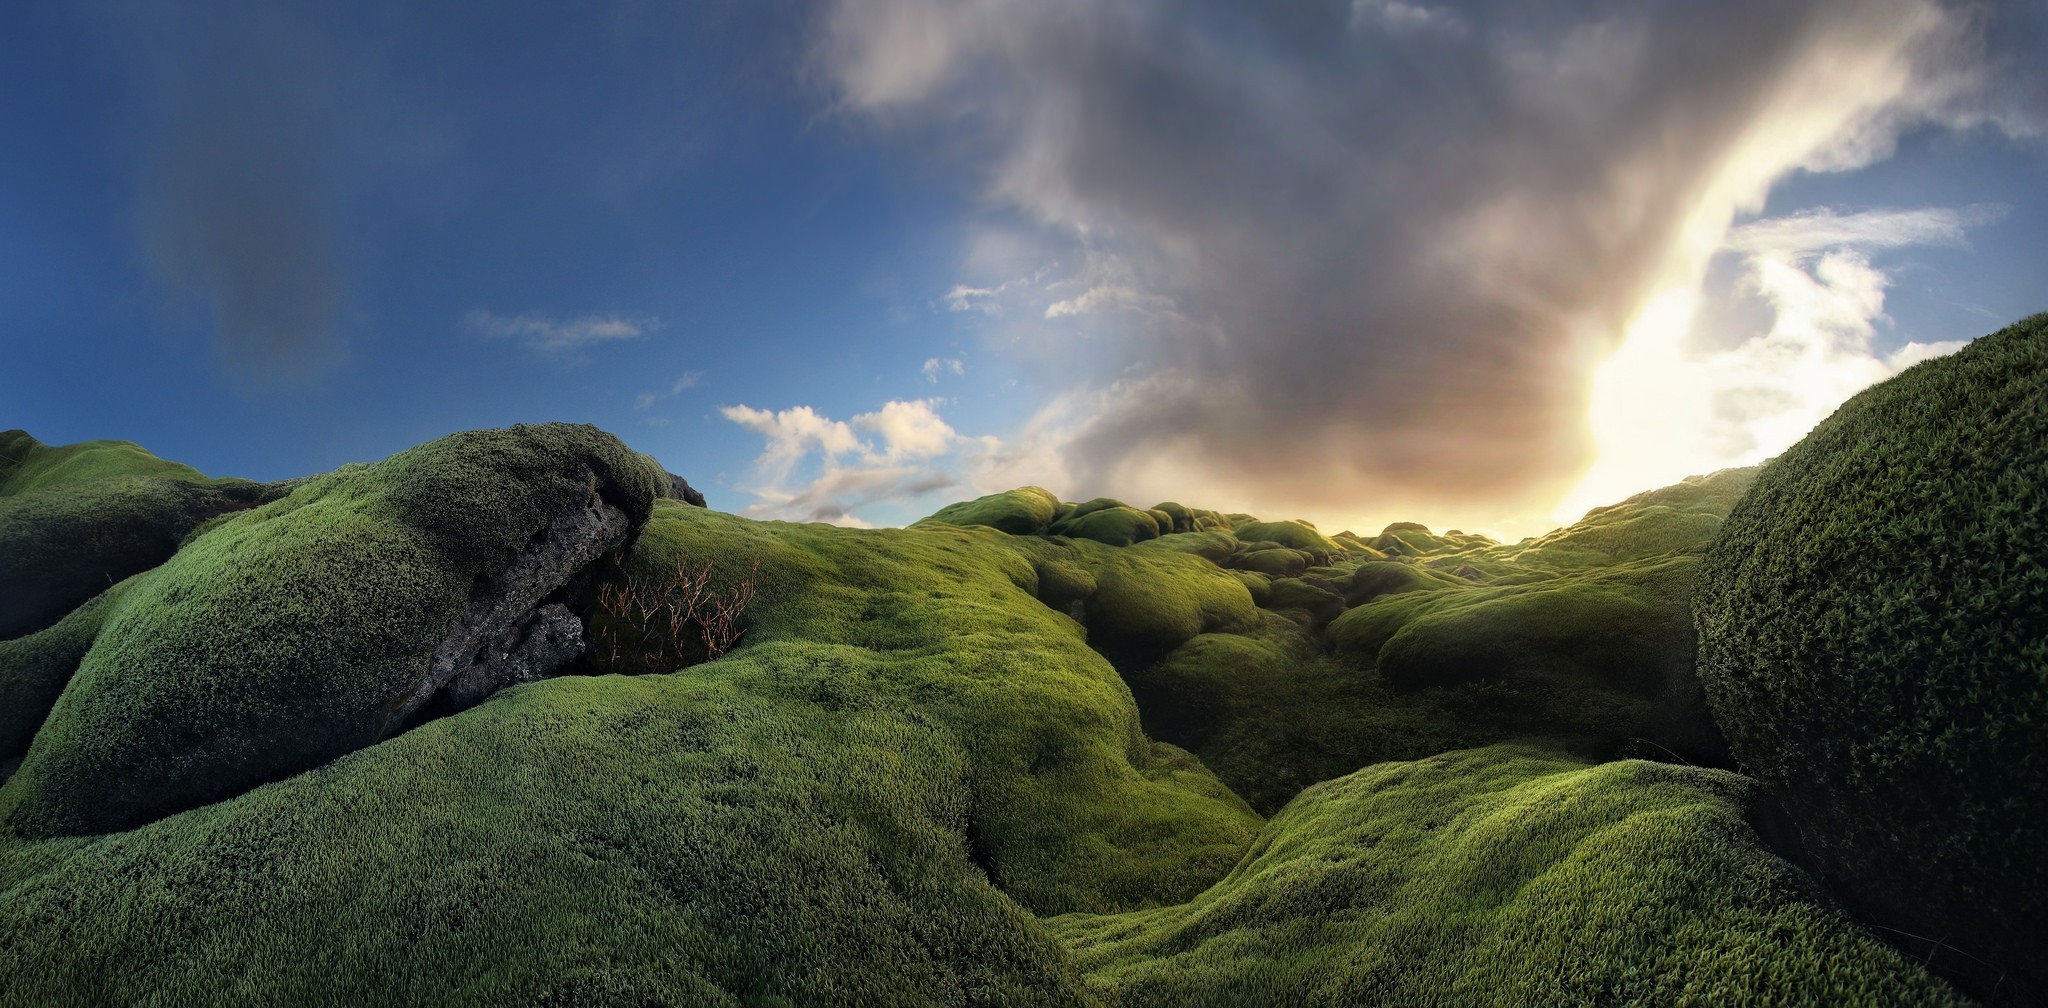 General 2048x1008 photography landscape nature rocks moss clouds sunset sunlight Iceland